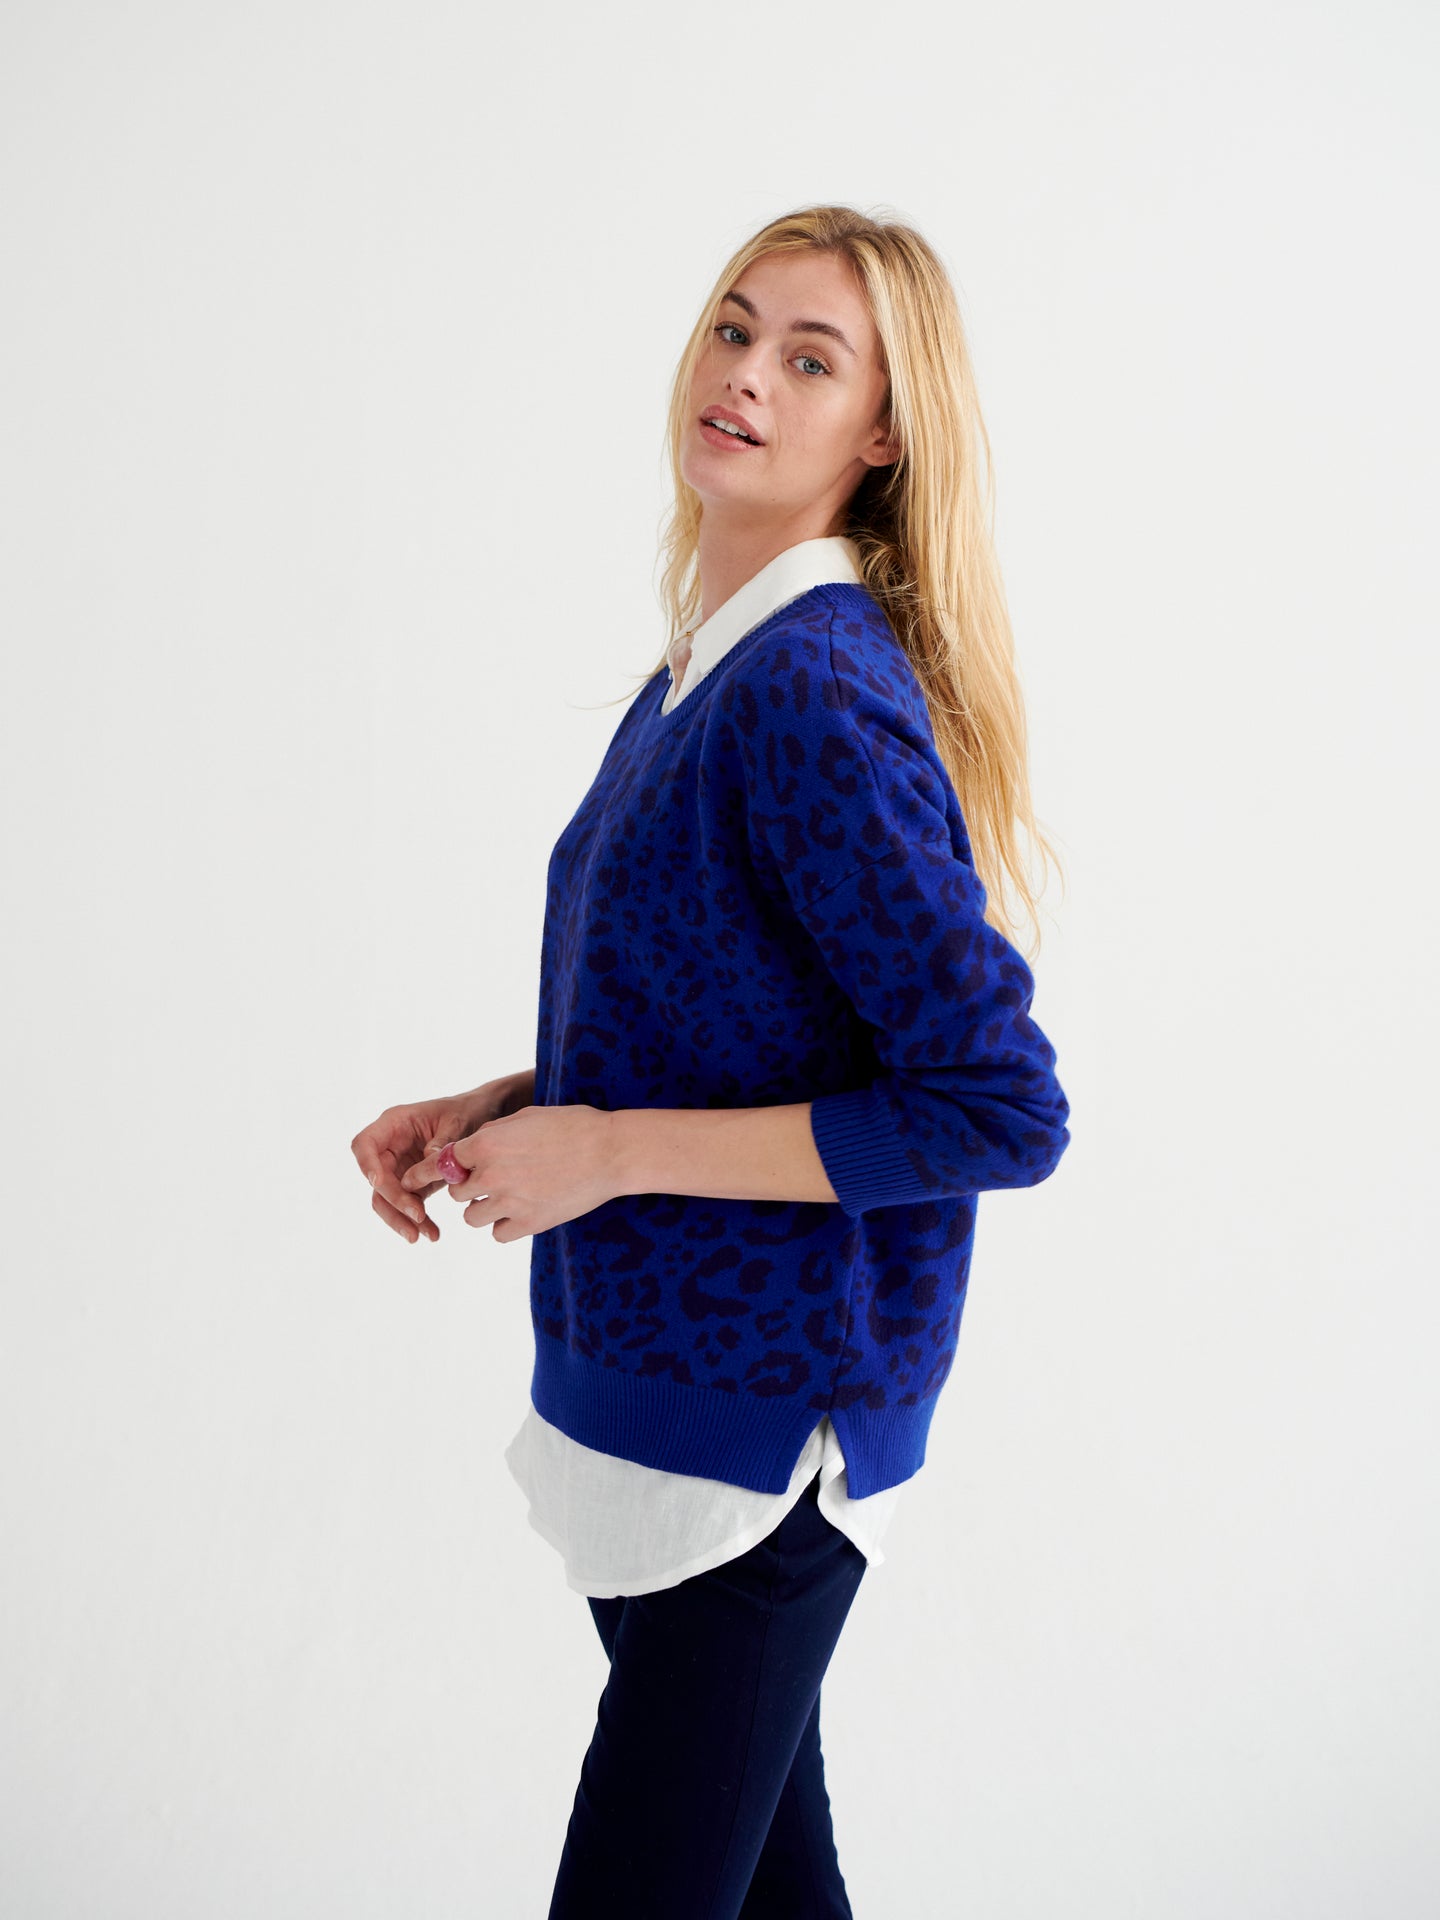 Minnie cotton cashmere blend jacquard sweater - Blue